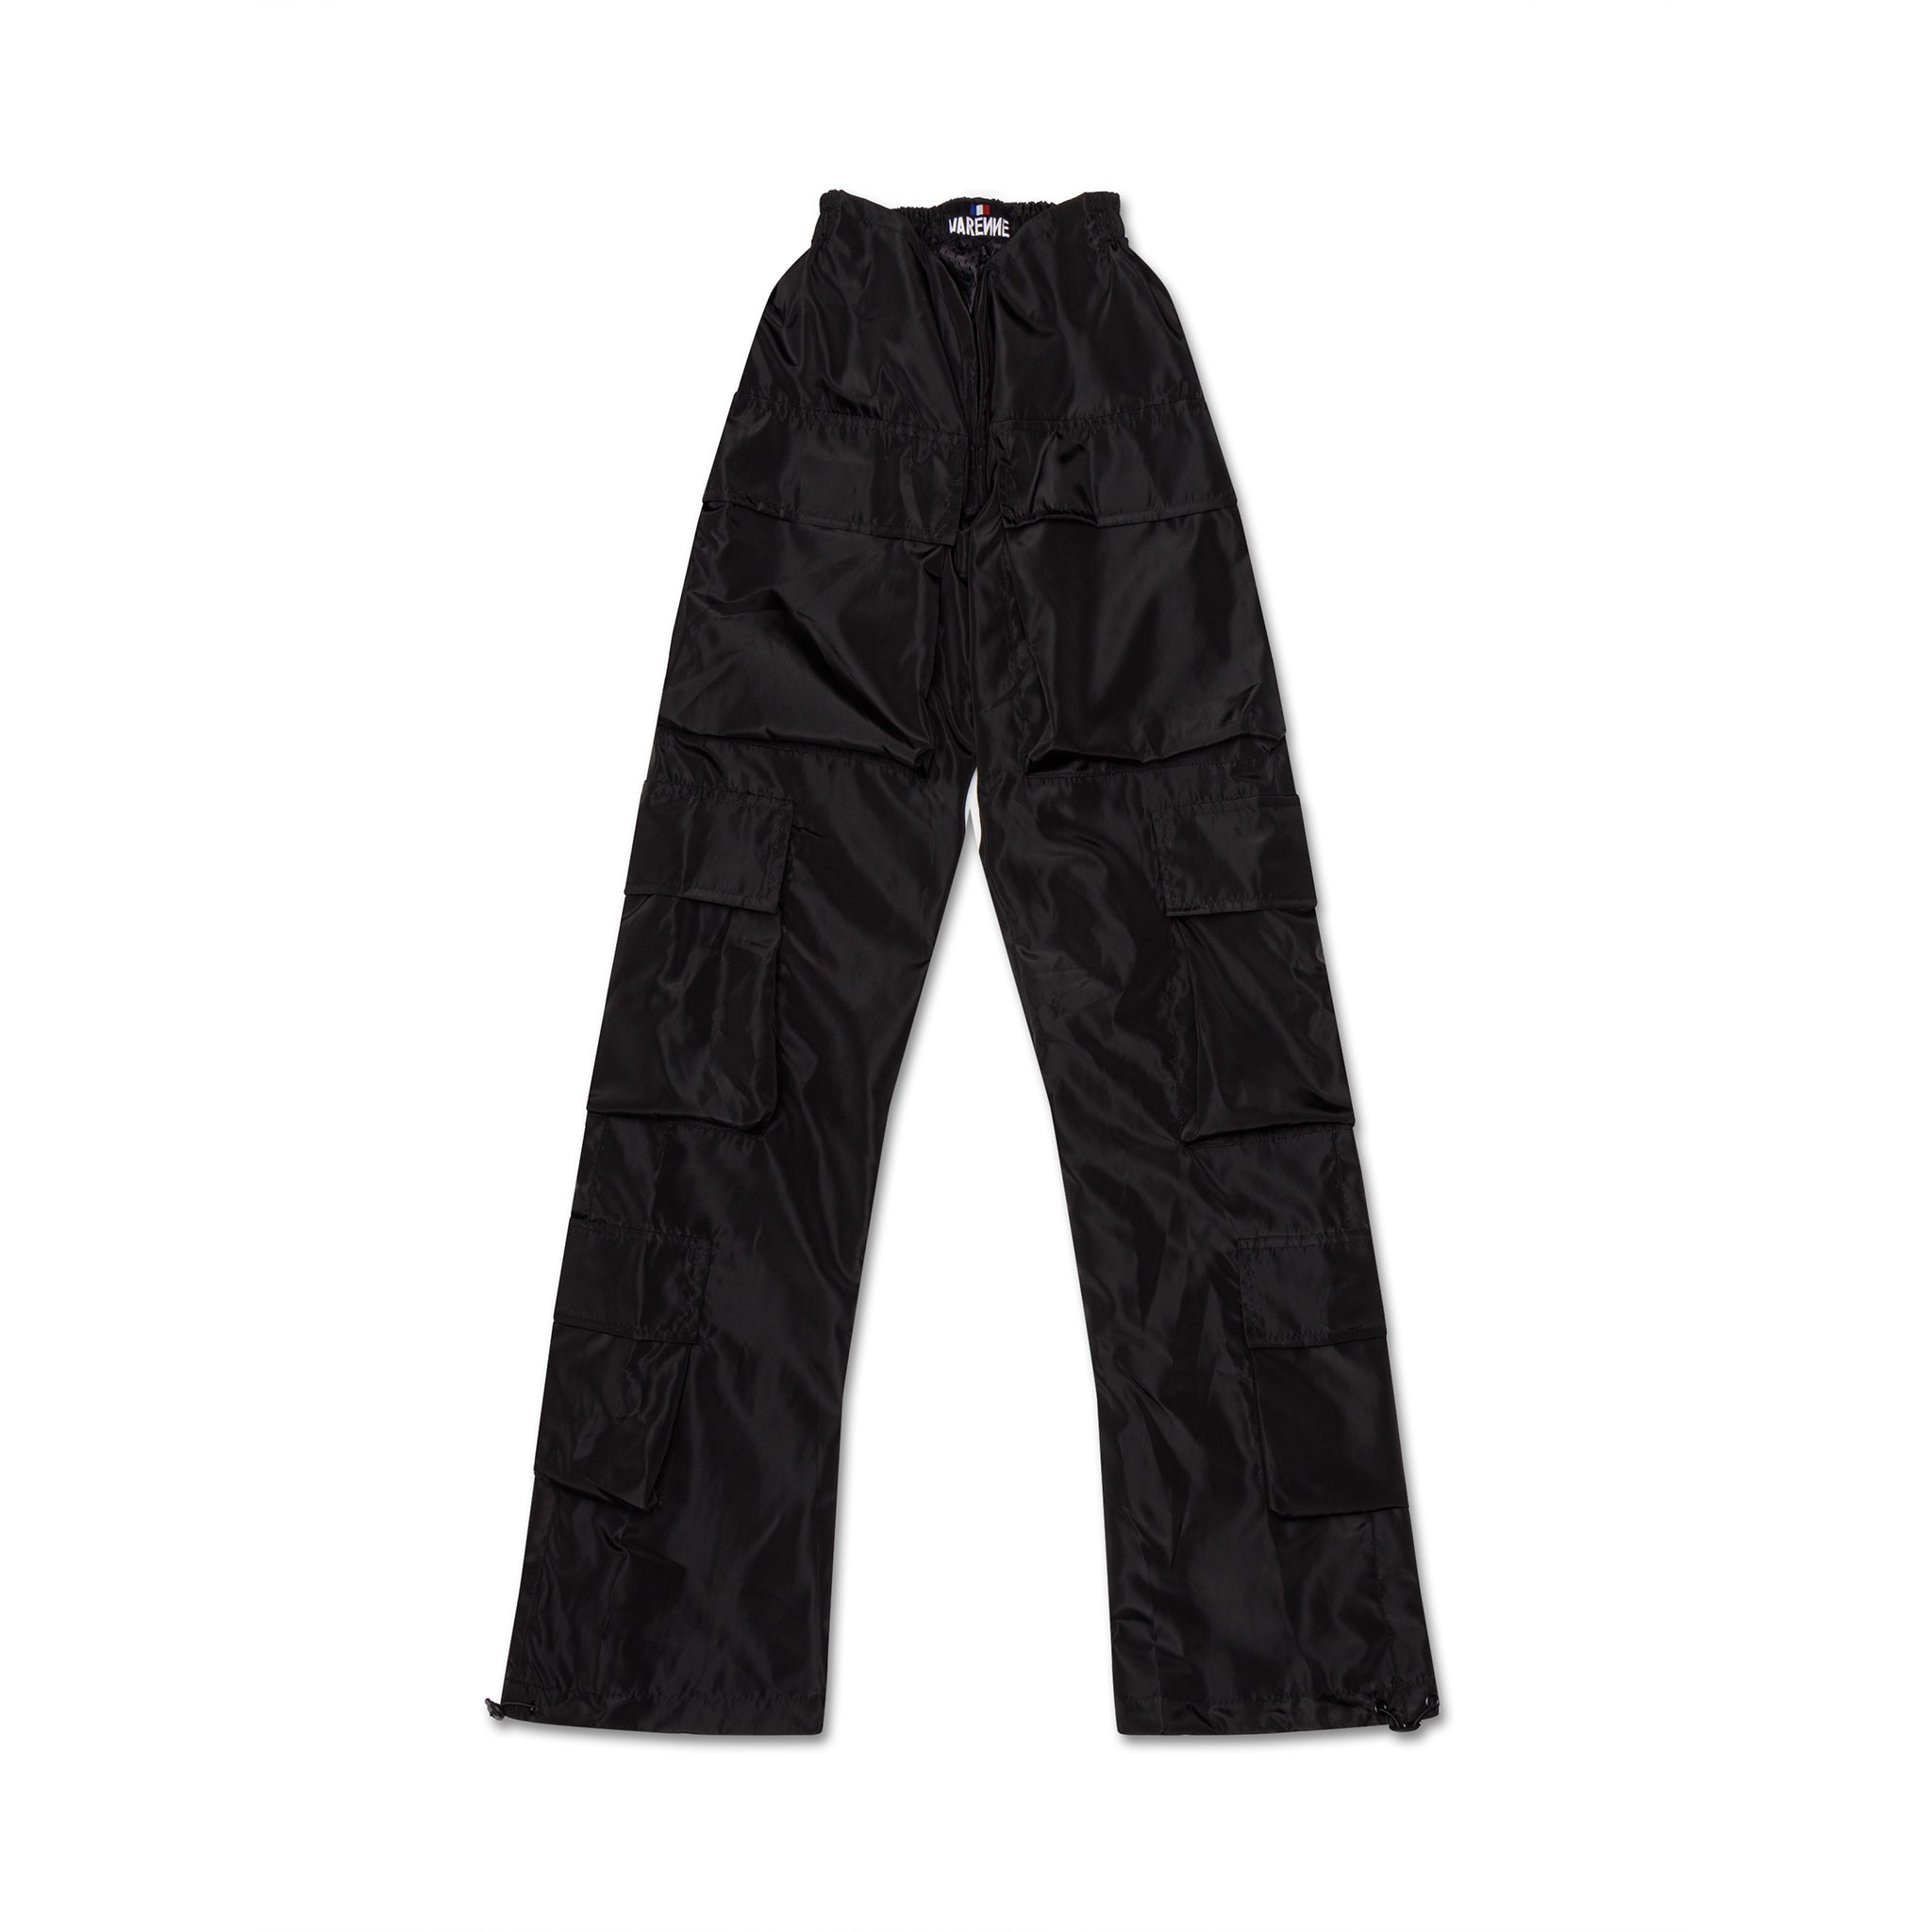 ASOS DESIGN seam detail cargo trouser in black with contrast stitch | ASOS